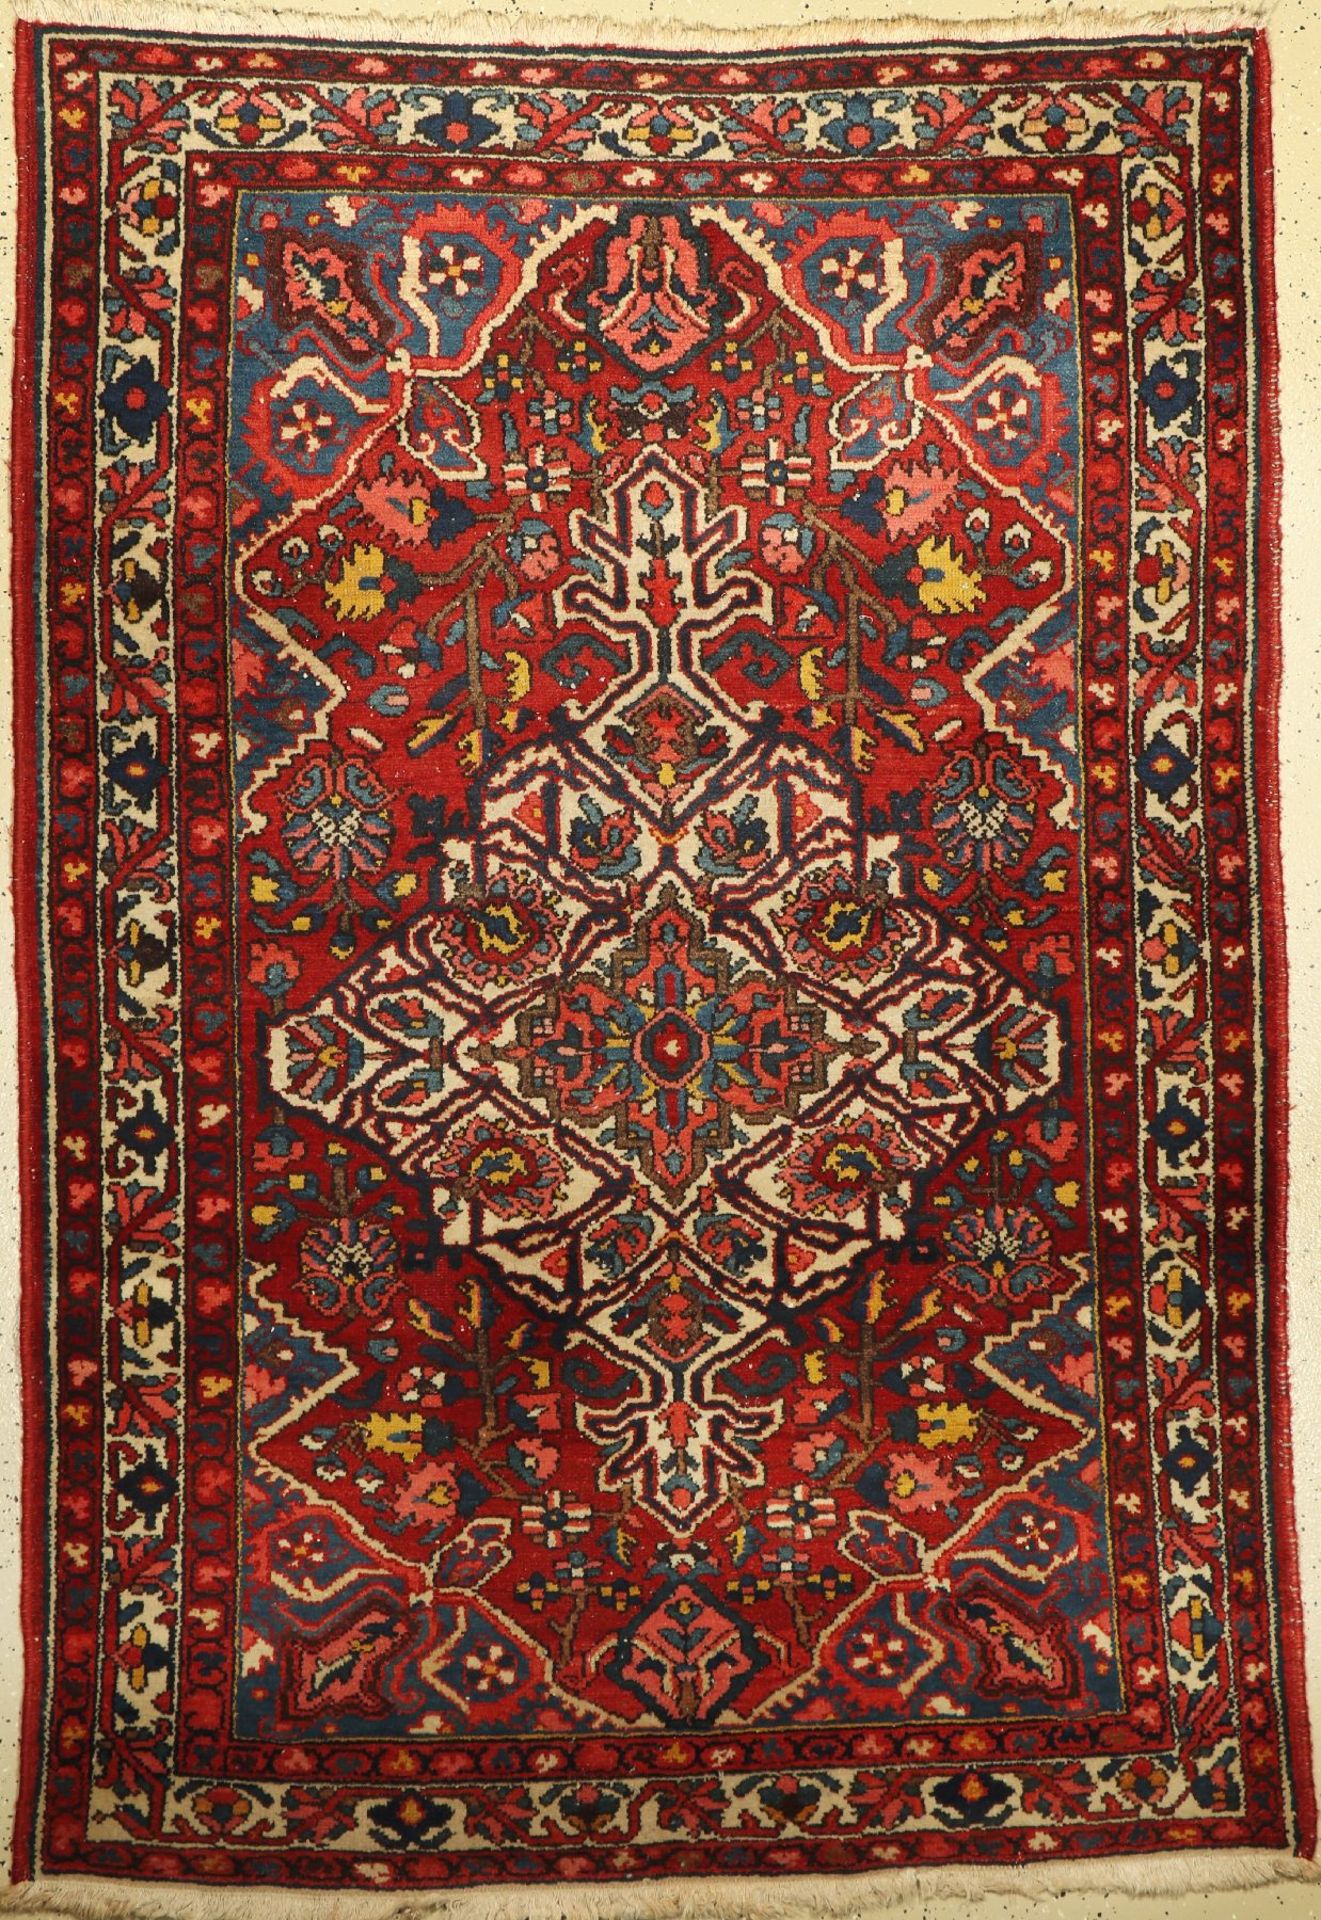 Bachtiar, Persien, um 1950/60, Wolle auf Baumwolle, ca. 206 x 143 cm, EHZ: 3Bakhtiar Rug, Persia,